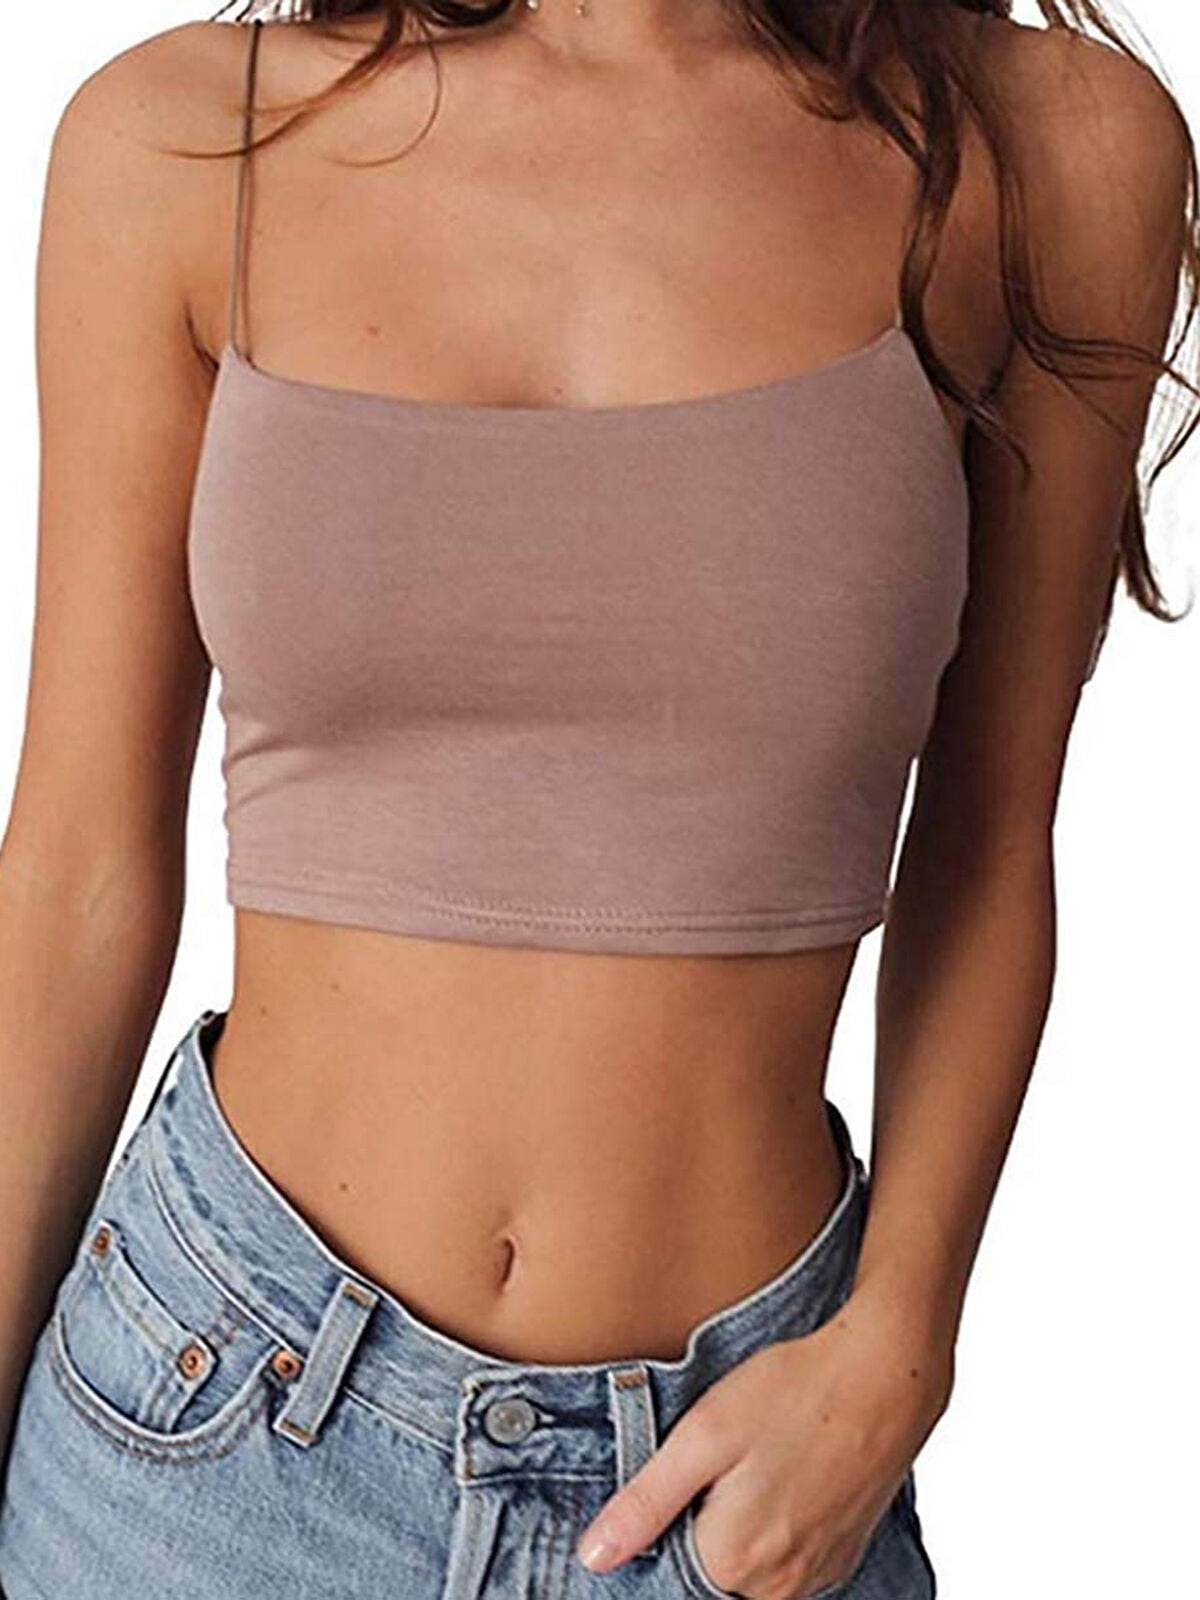 Tops Women Shirt Bandage Sleeveless Blouse V-Neck Tank Vest Casual Crop Top S-XL 